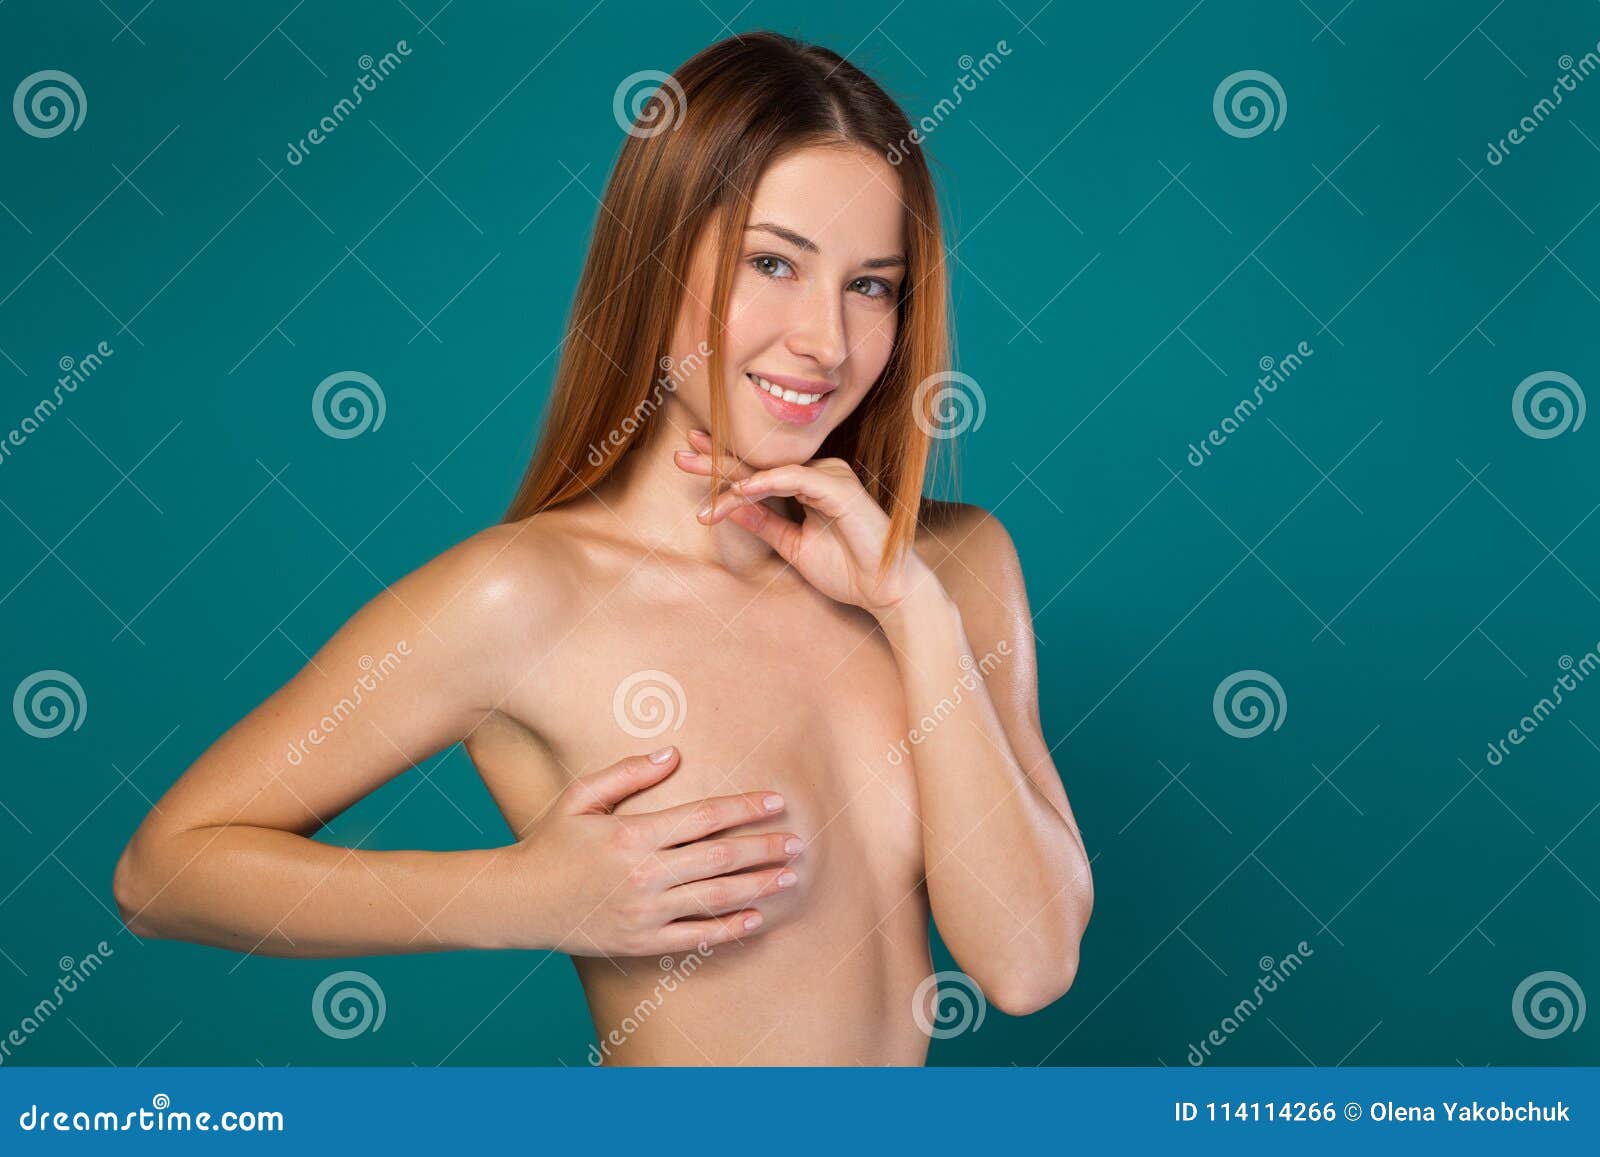 Nude Girl Standing